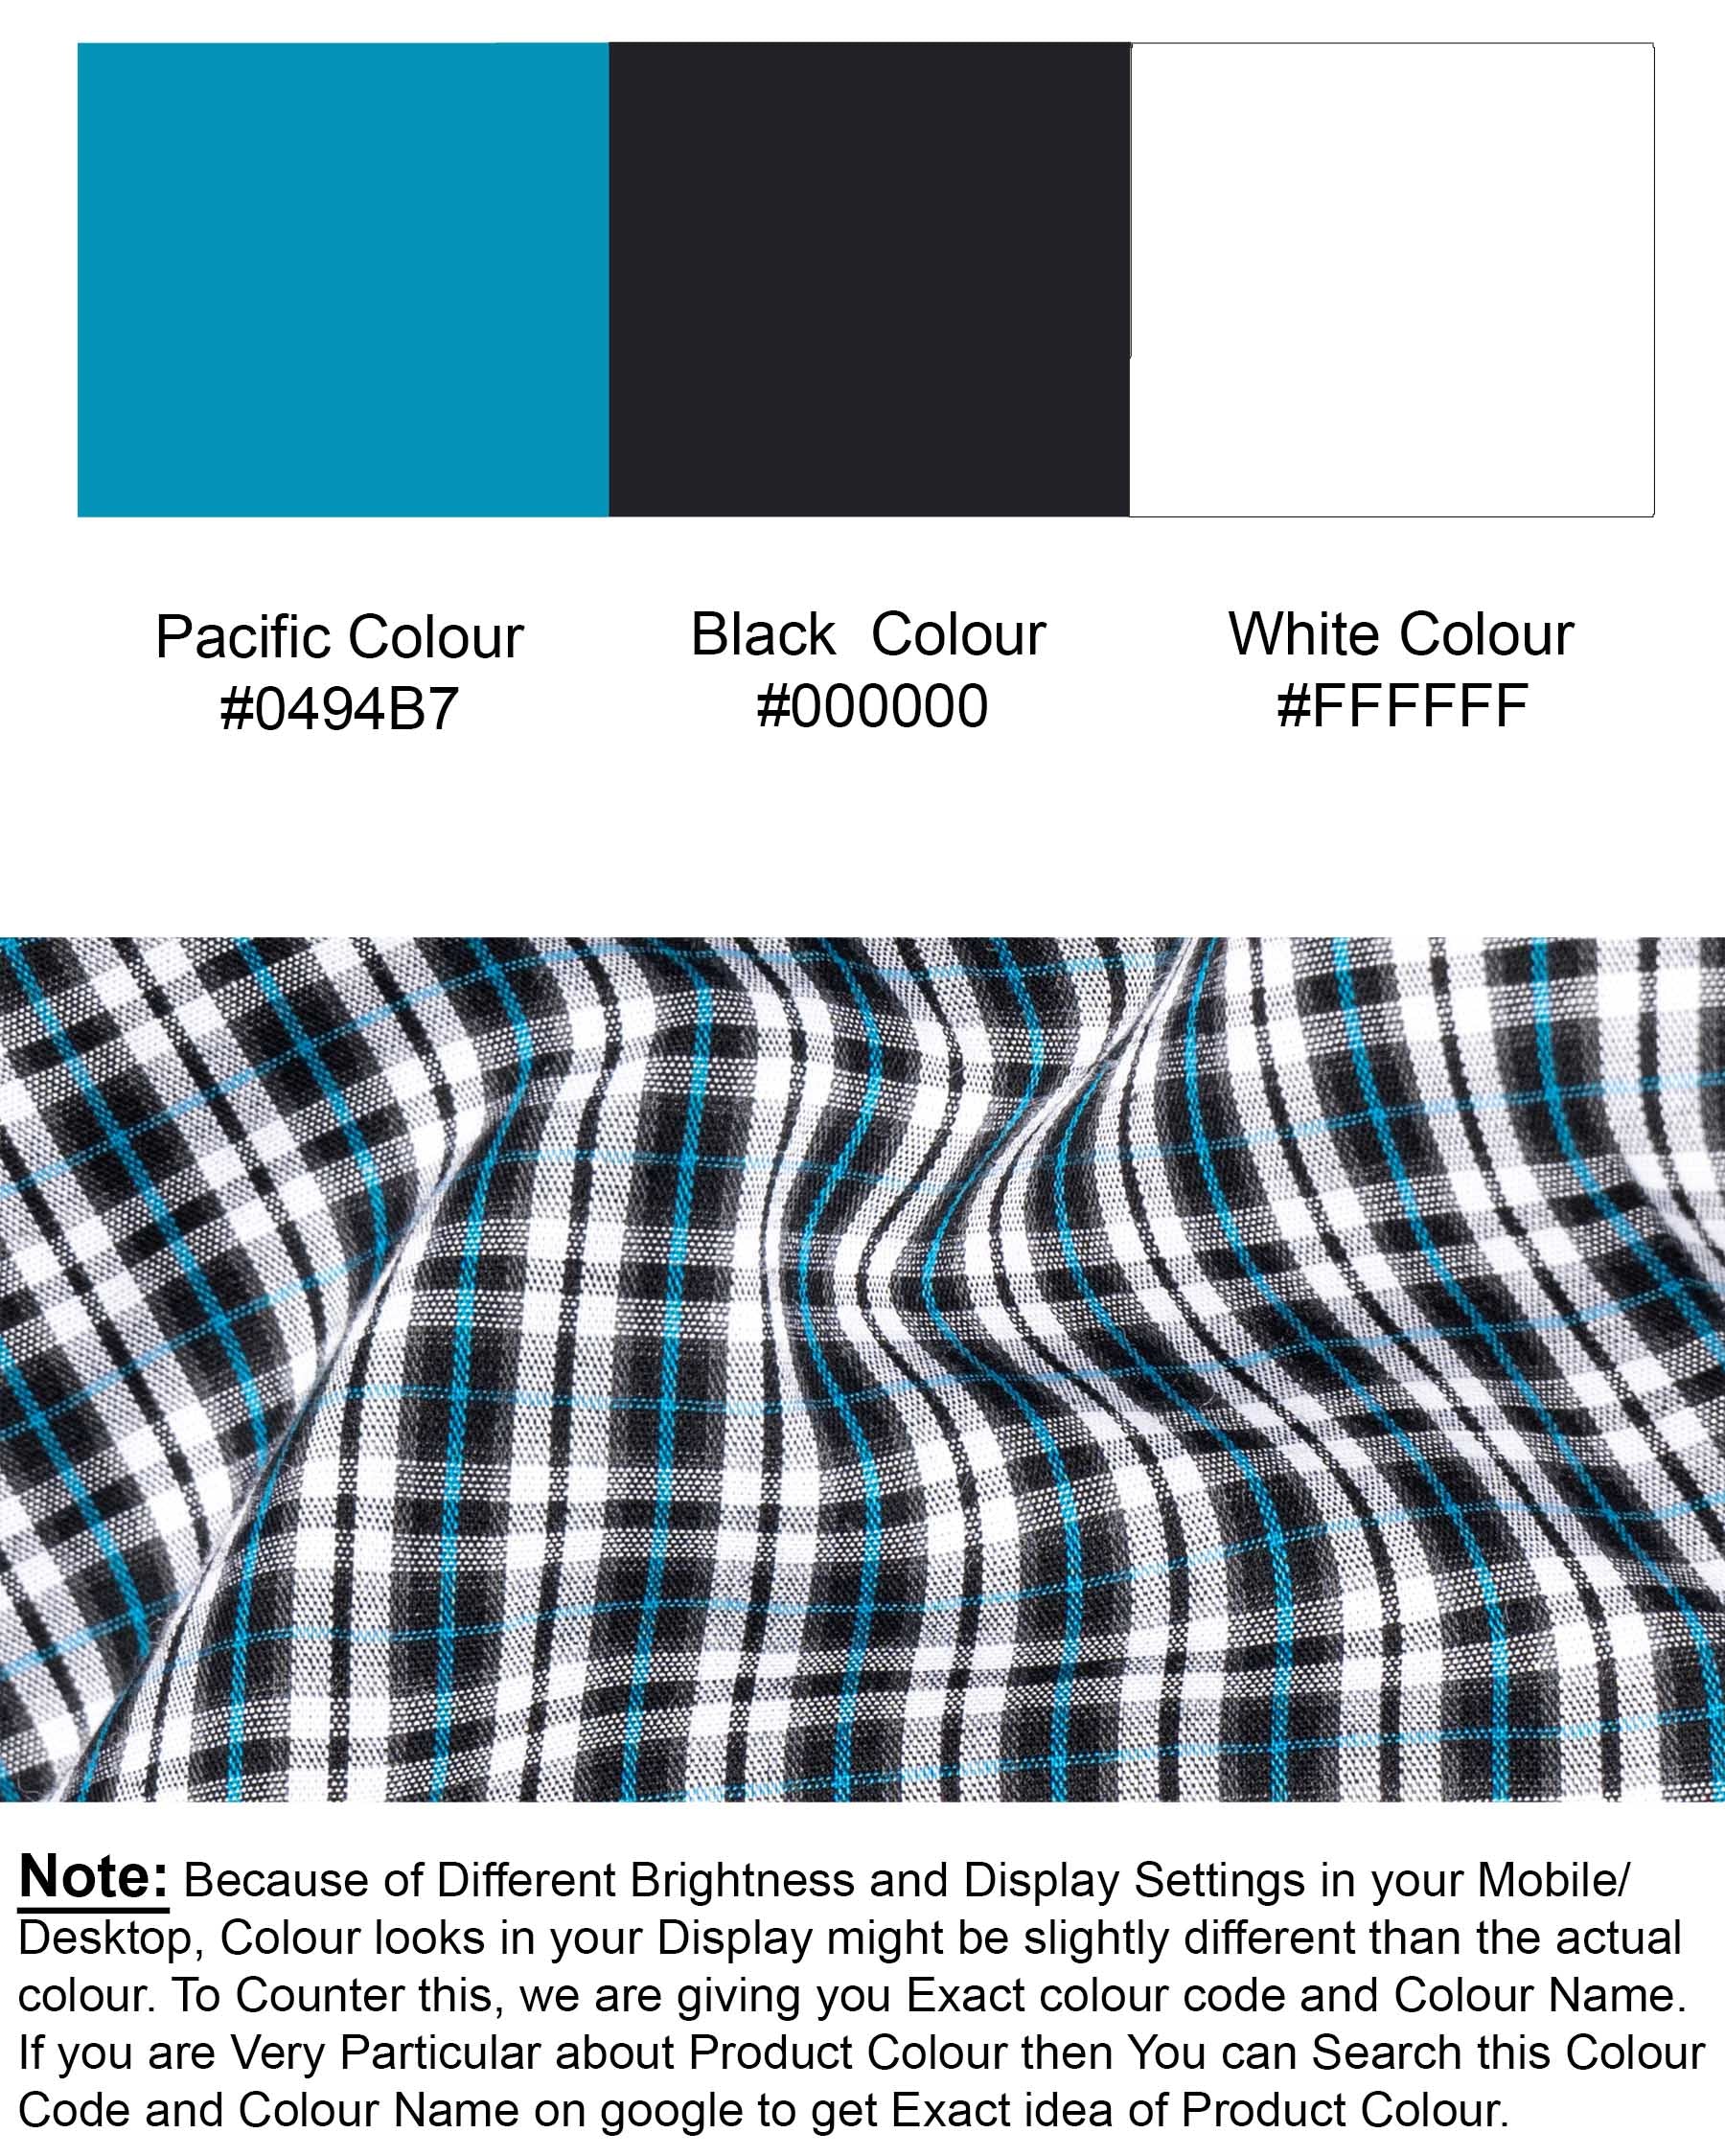 Black and Pacific Blue Plaid Premium Cotton Shirt